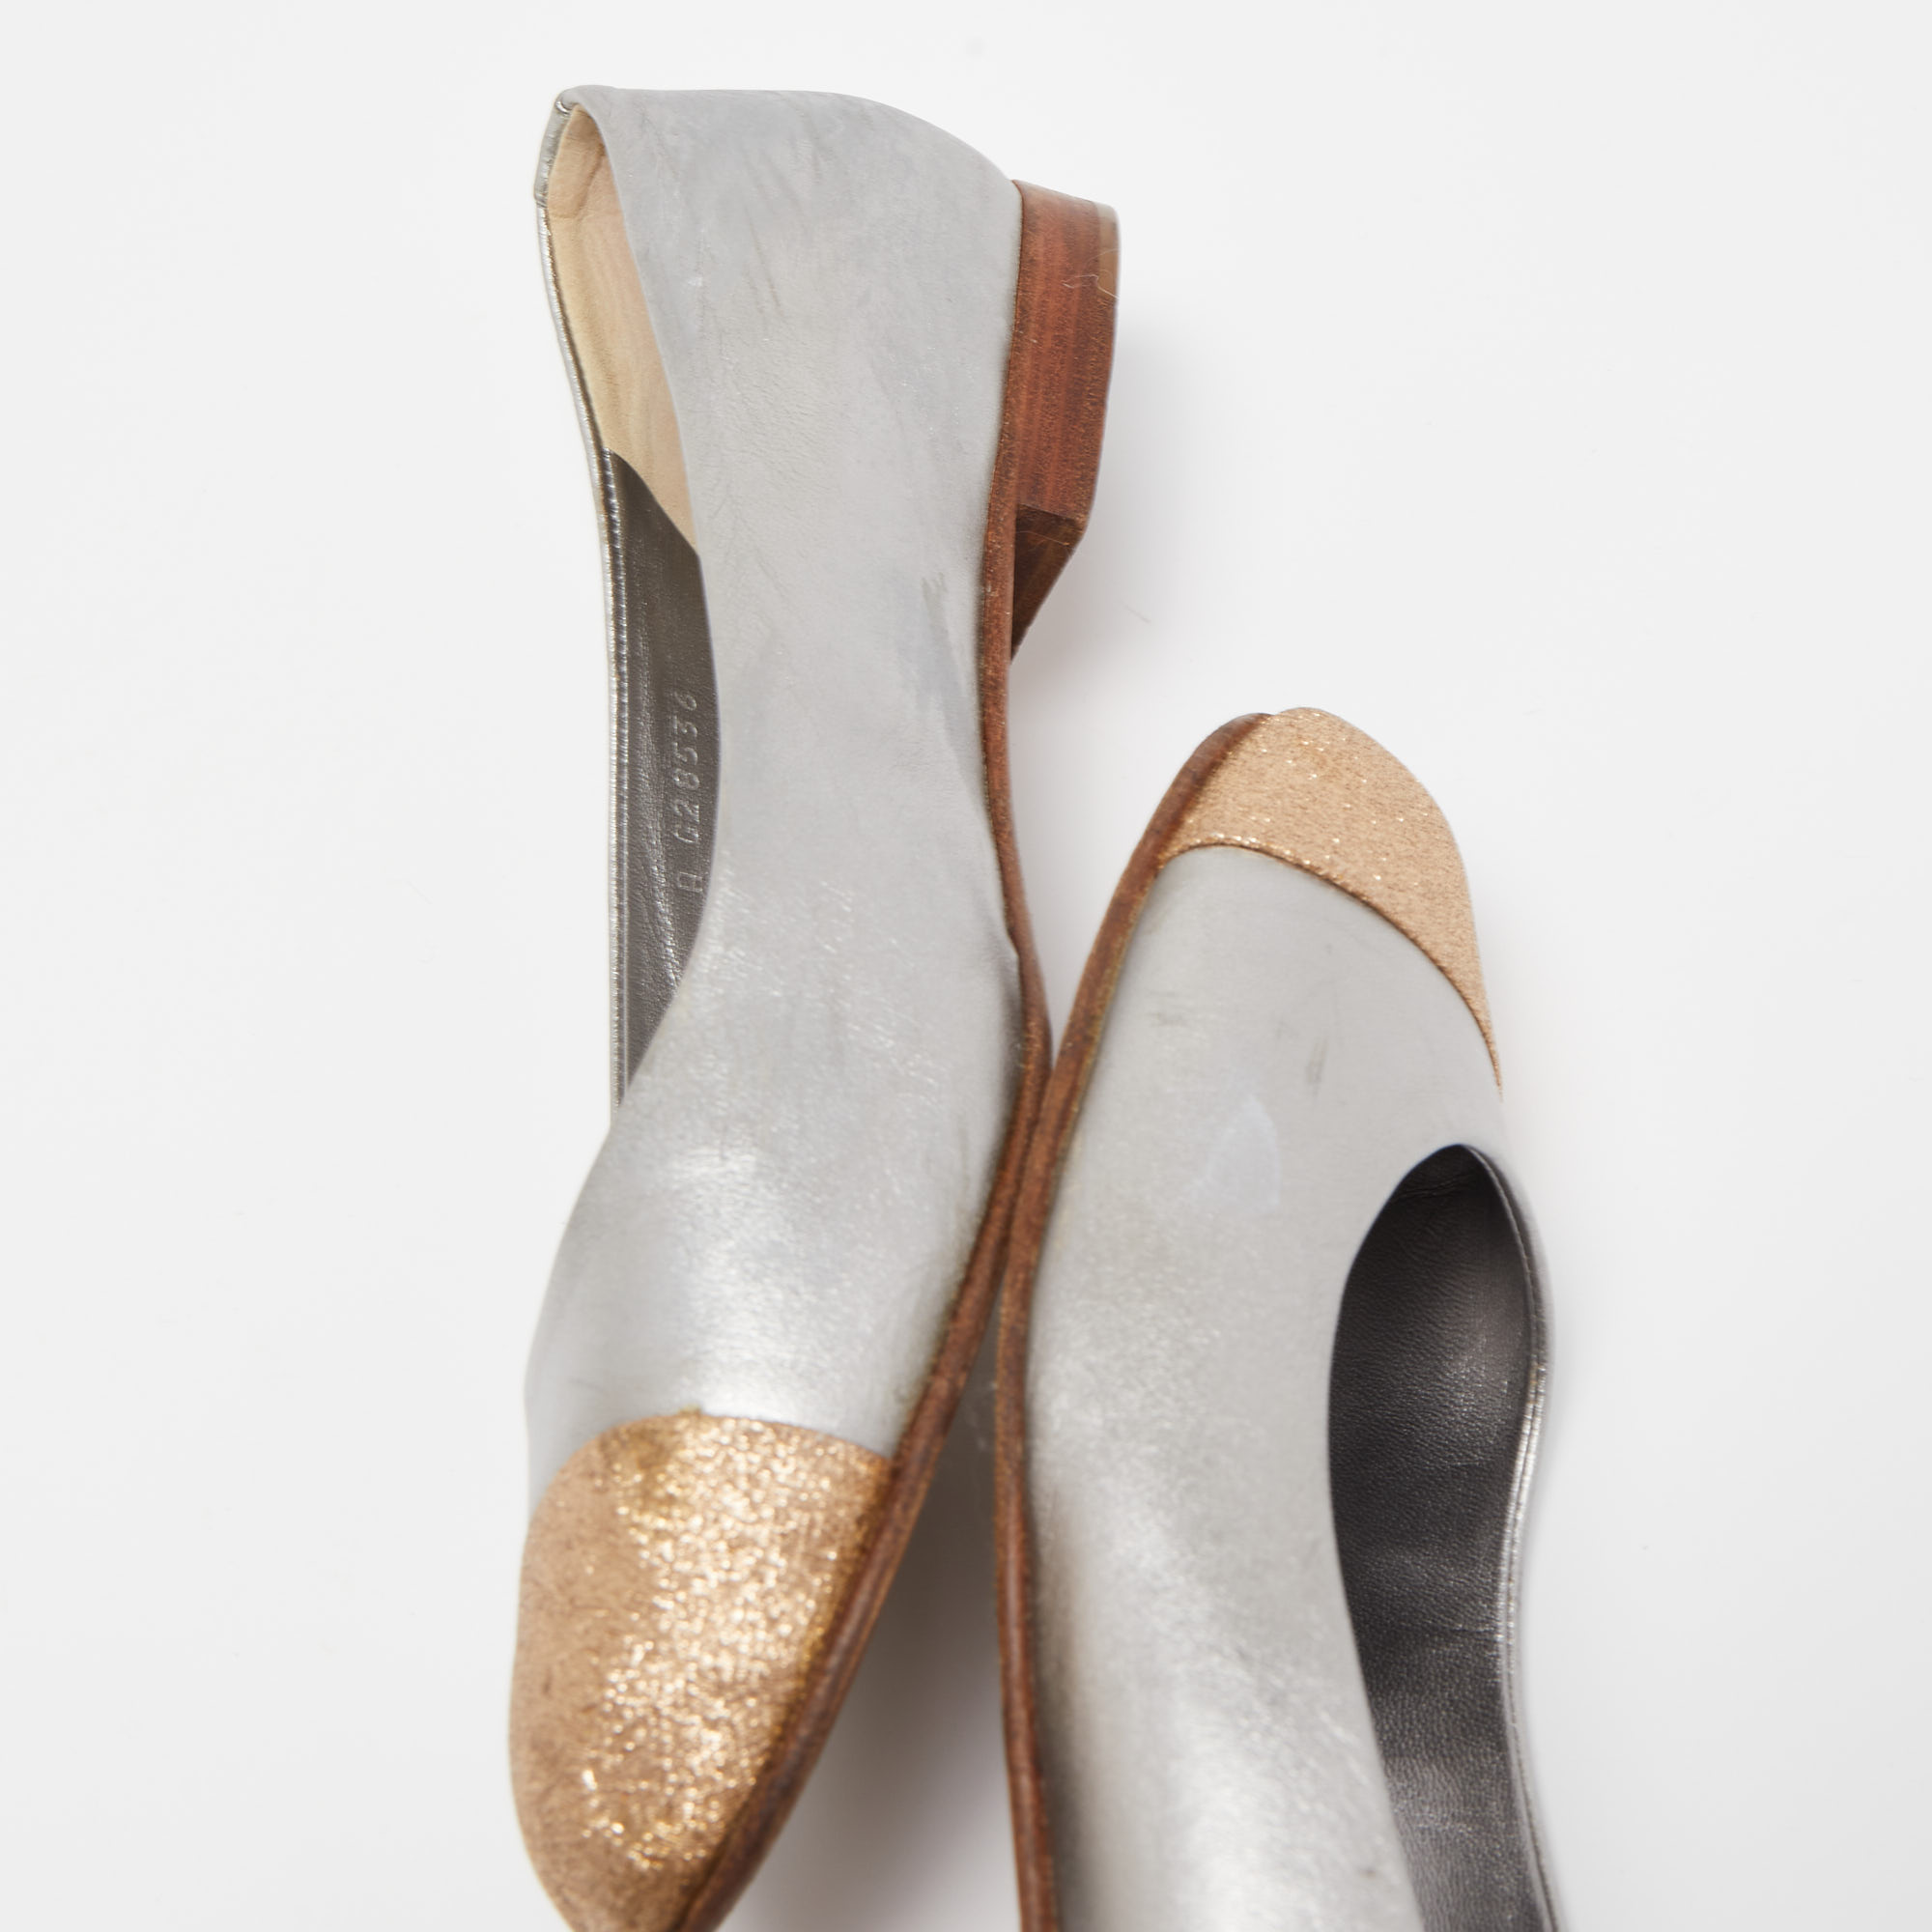 Chanel Metallic Gold/Silver Leather CC Cap Toe Ballet Flats Size 38